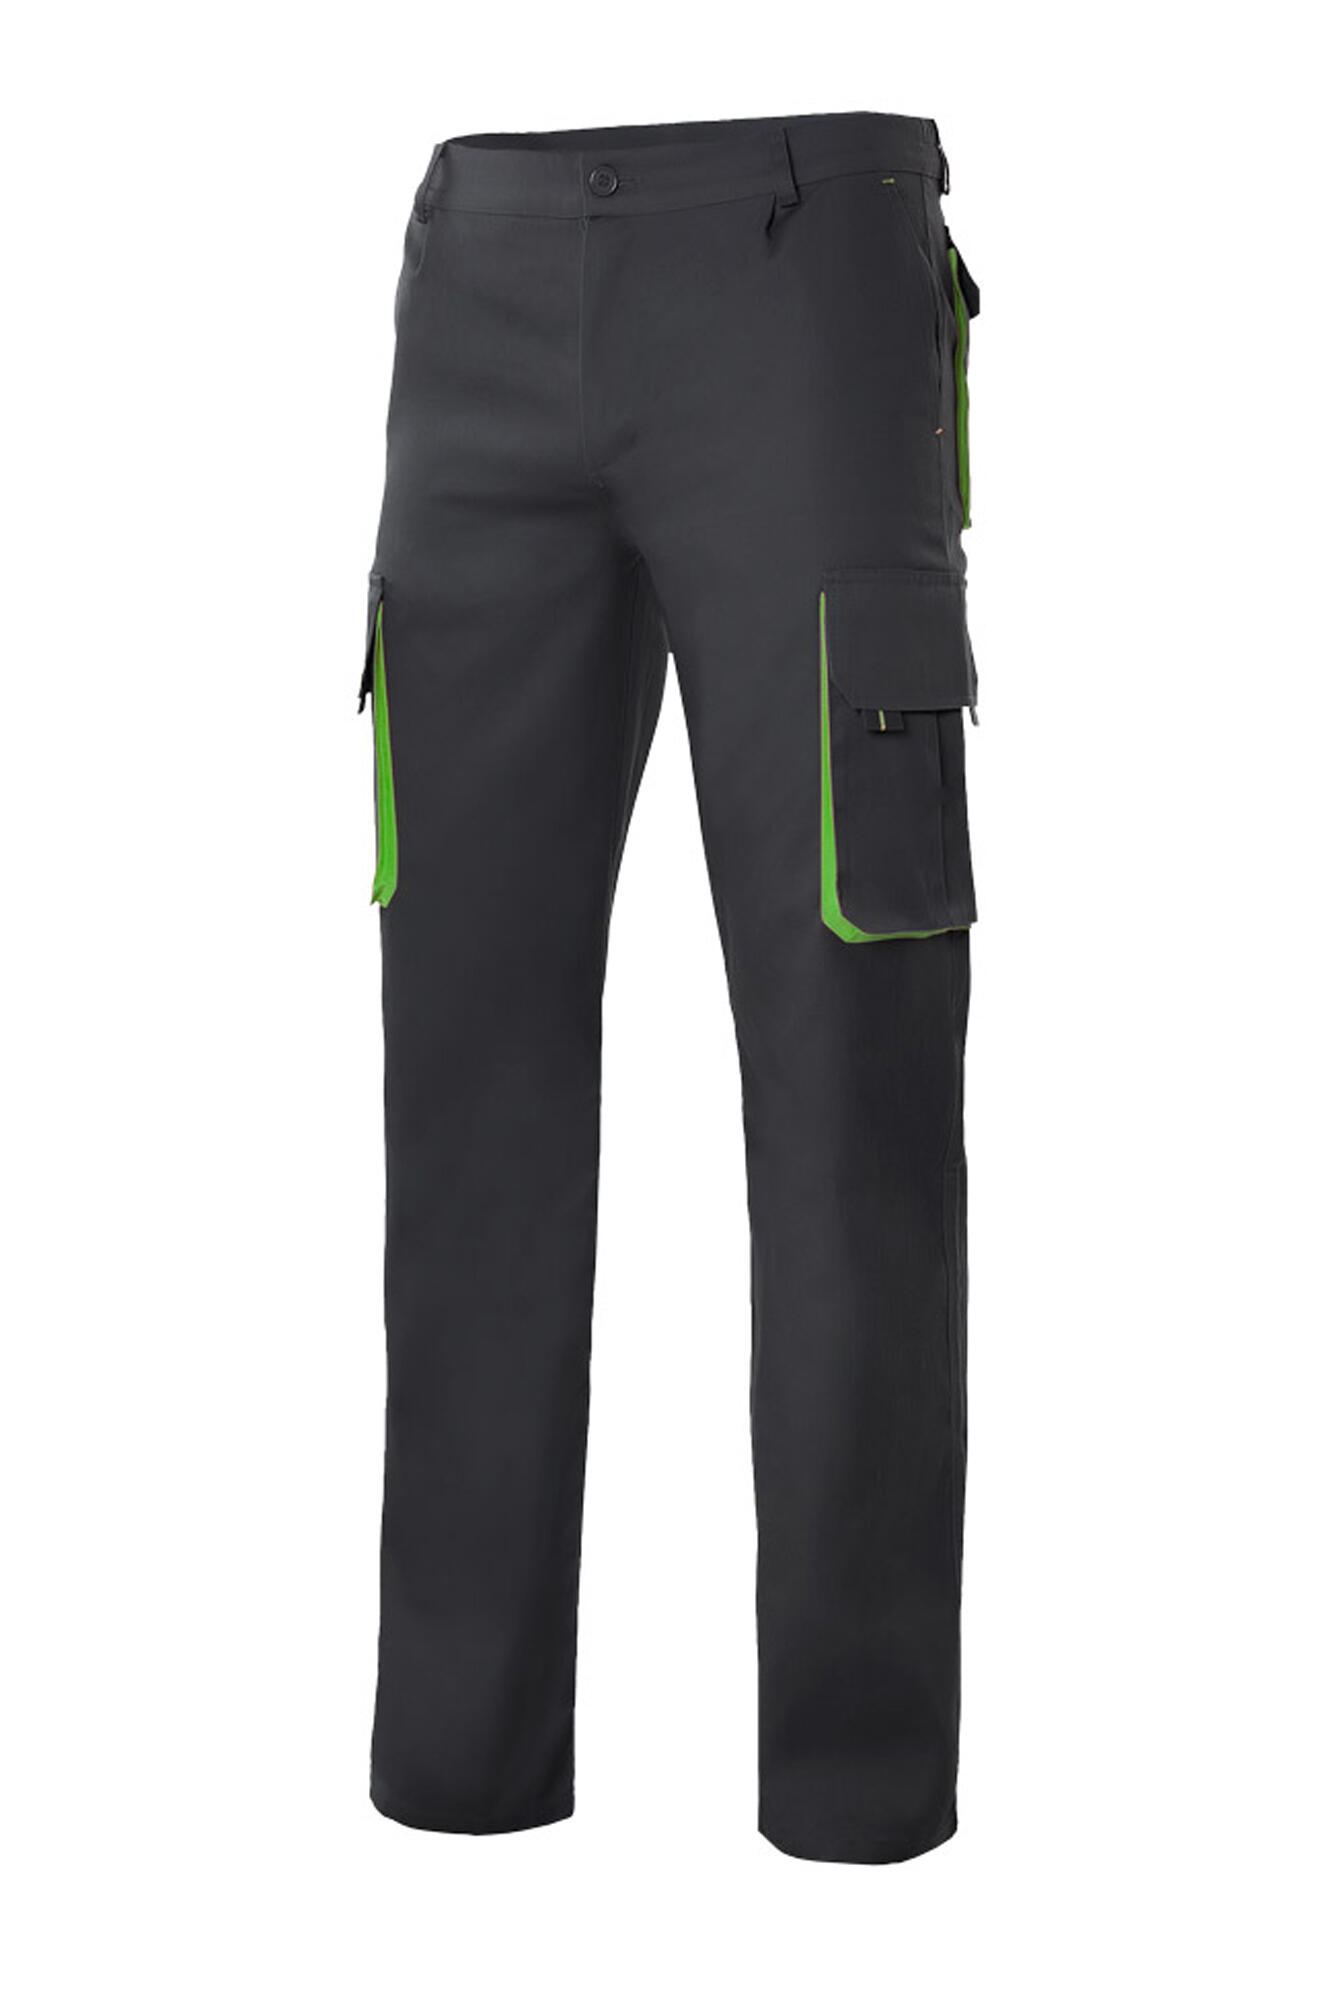 Pantalon de trabajo bicolor multibol negr/verdelima t58